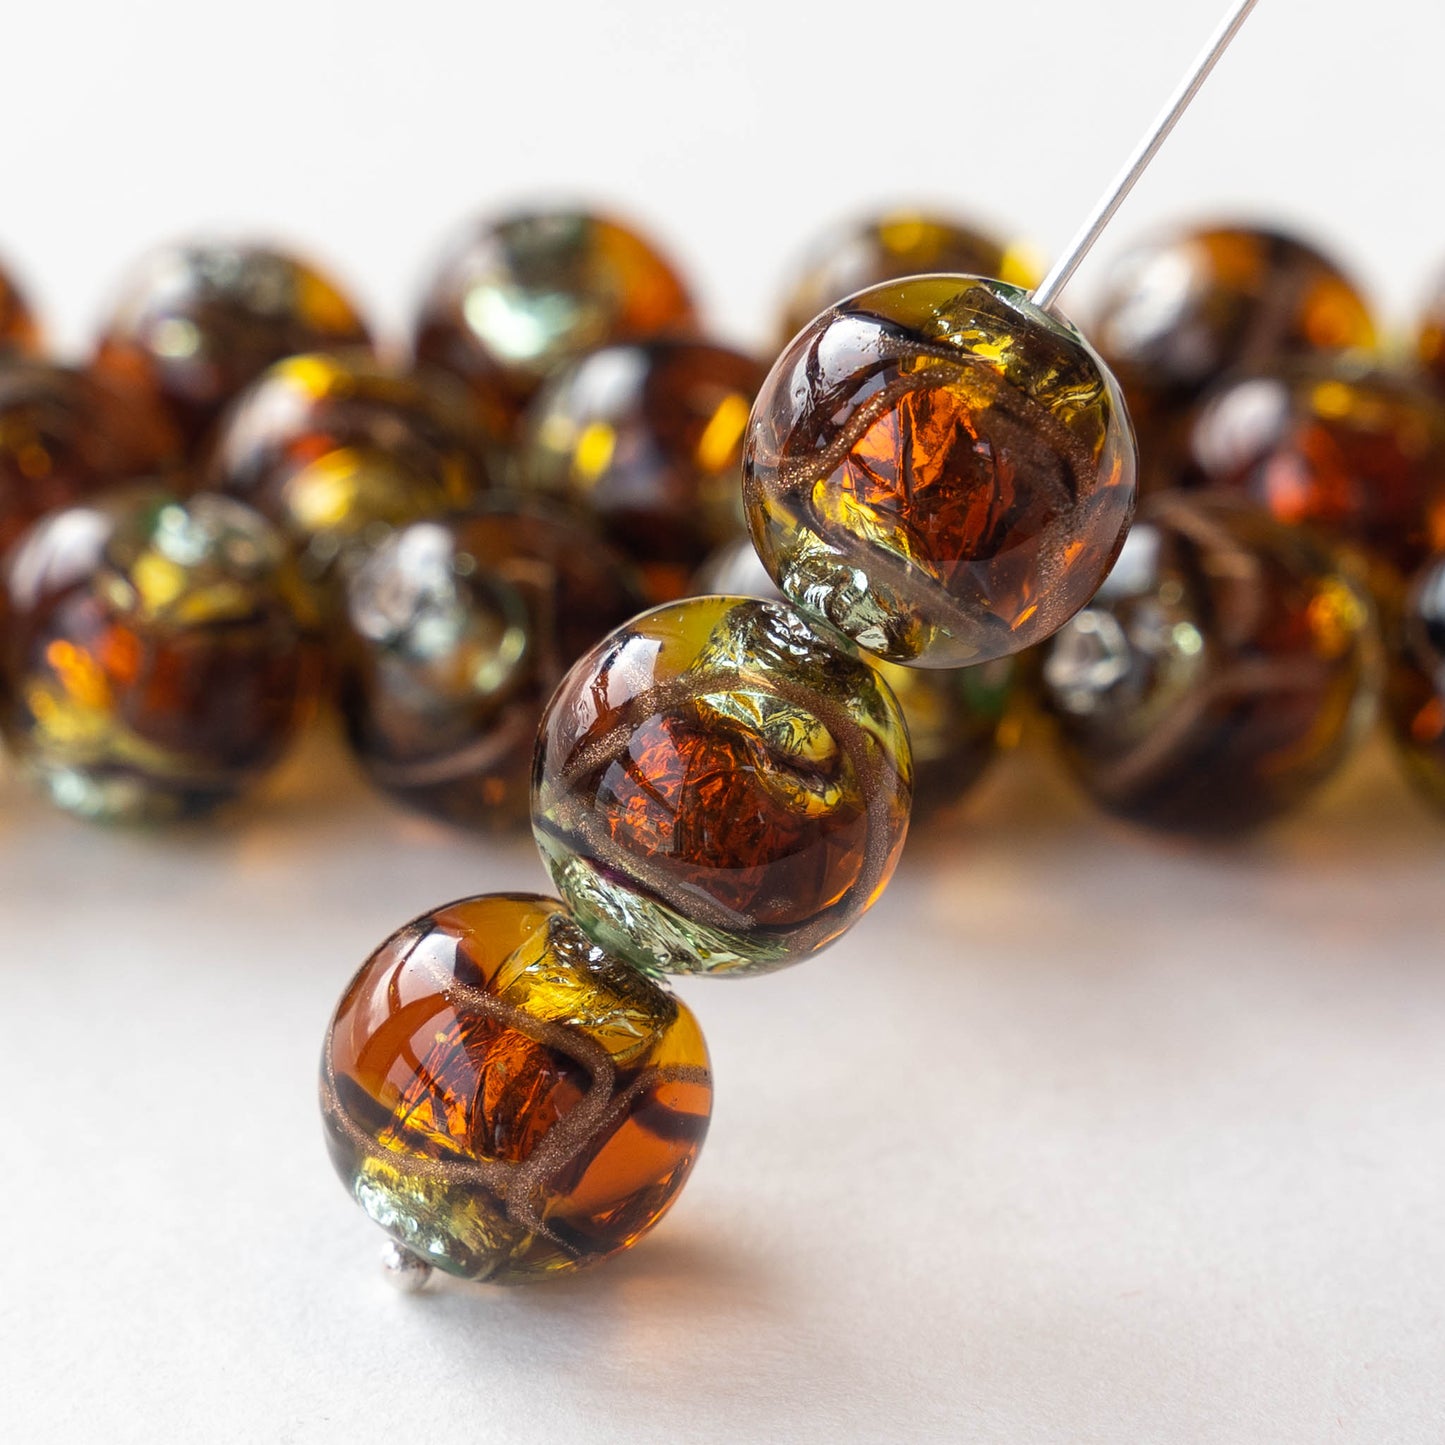 14mm Round Handmade Lampwork Foil Beads - Czech Glass Beads - Amber - 2, 4 or 8